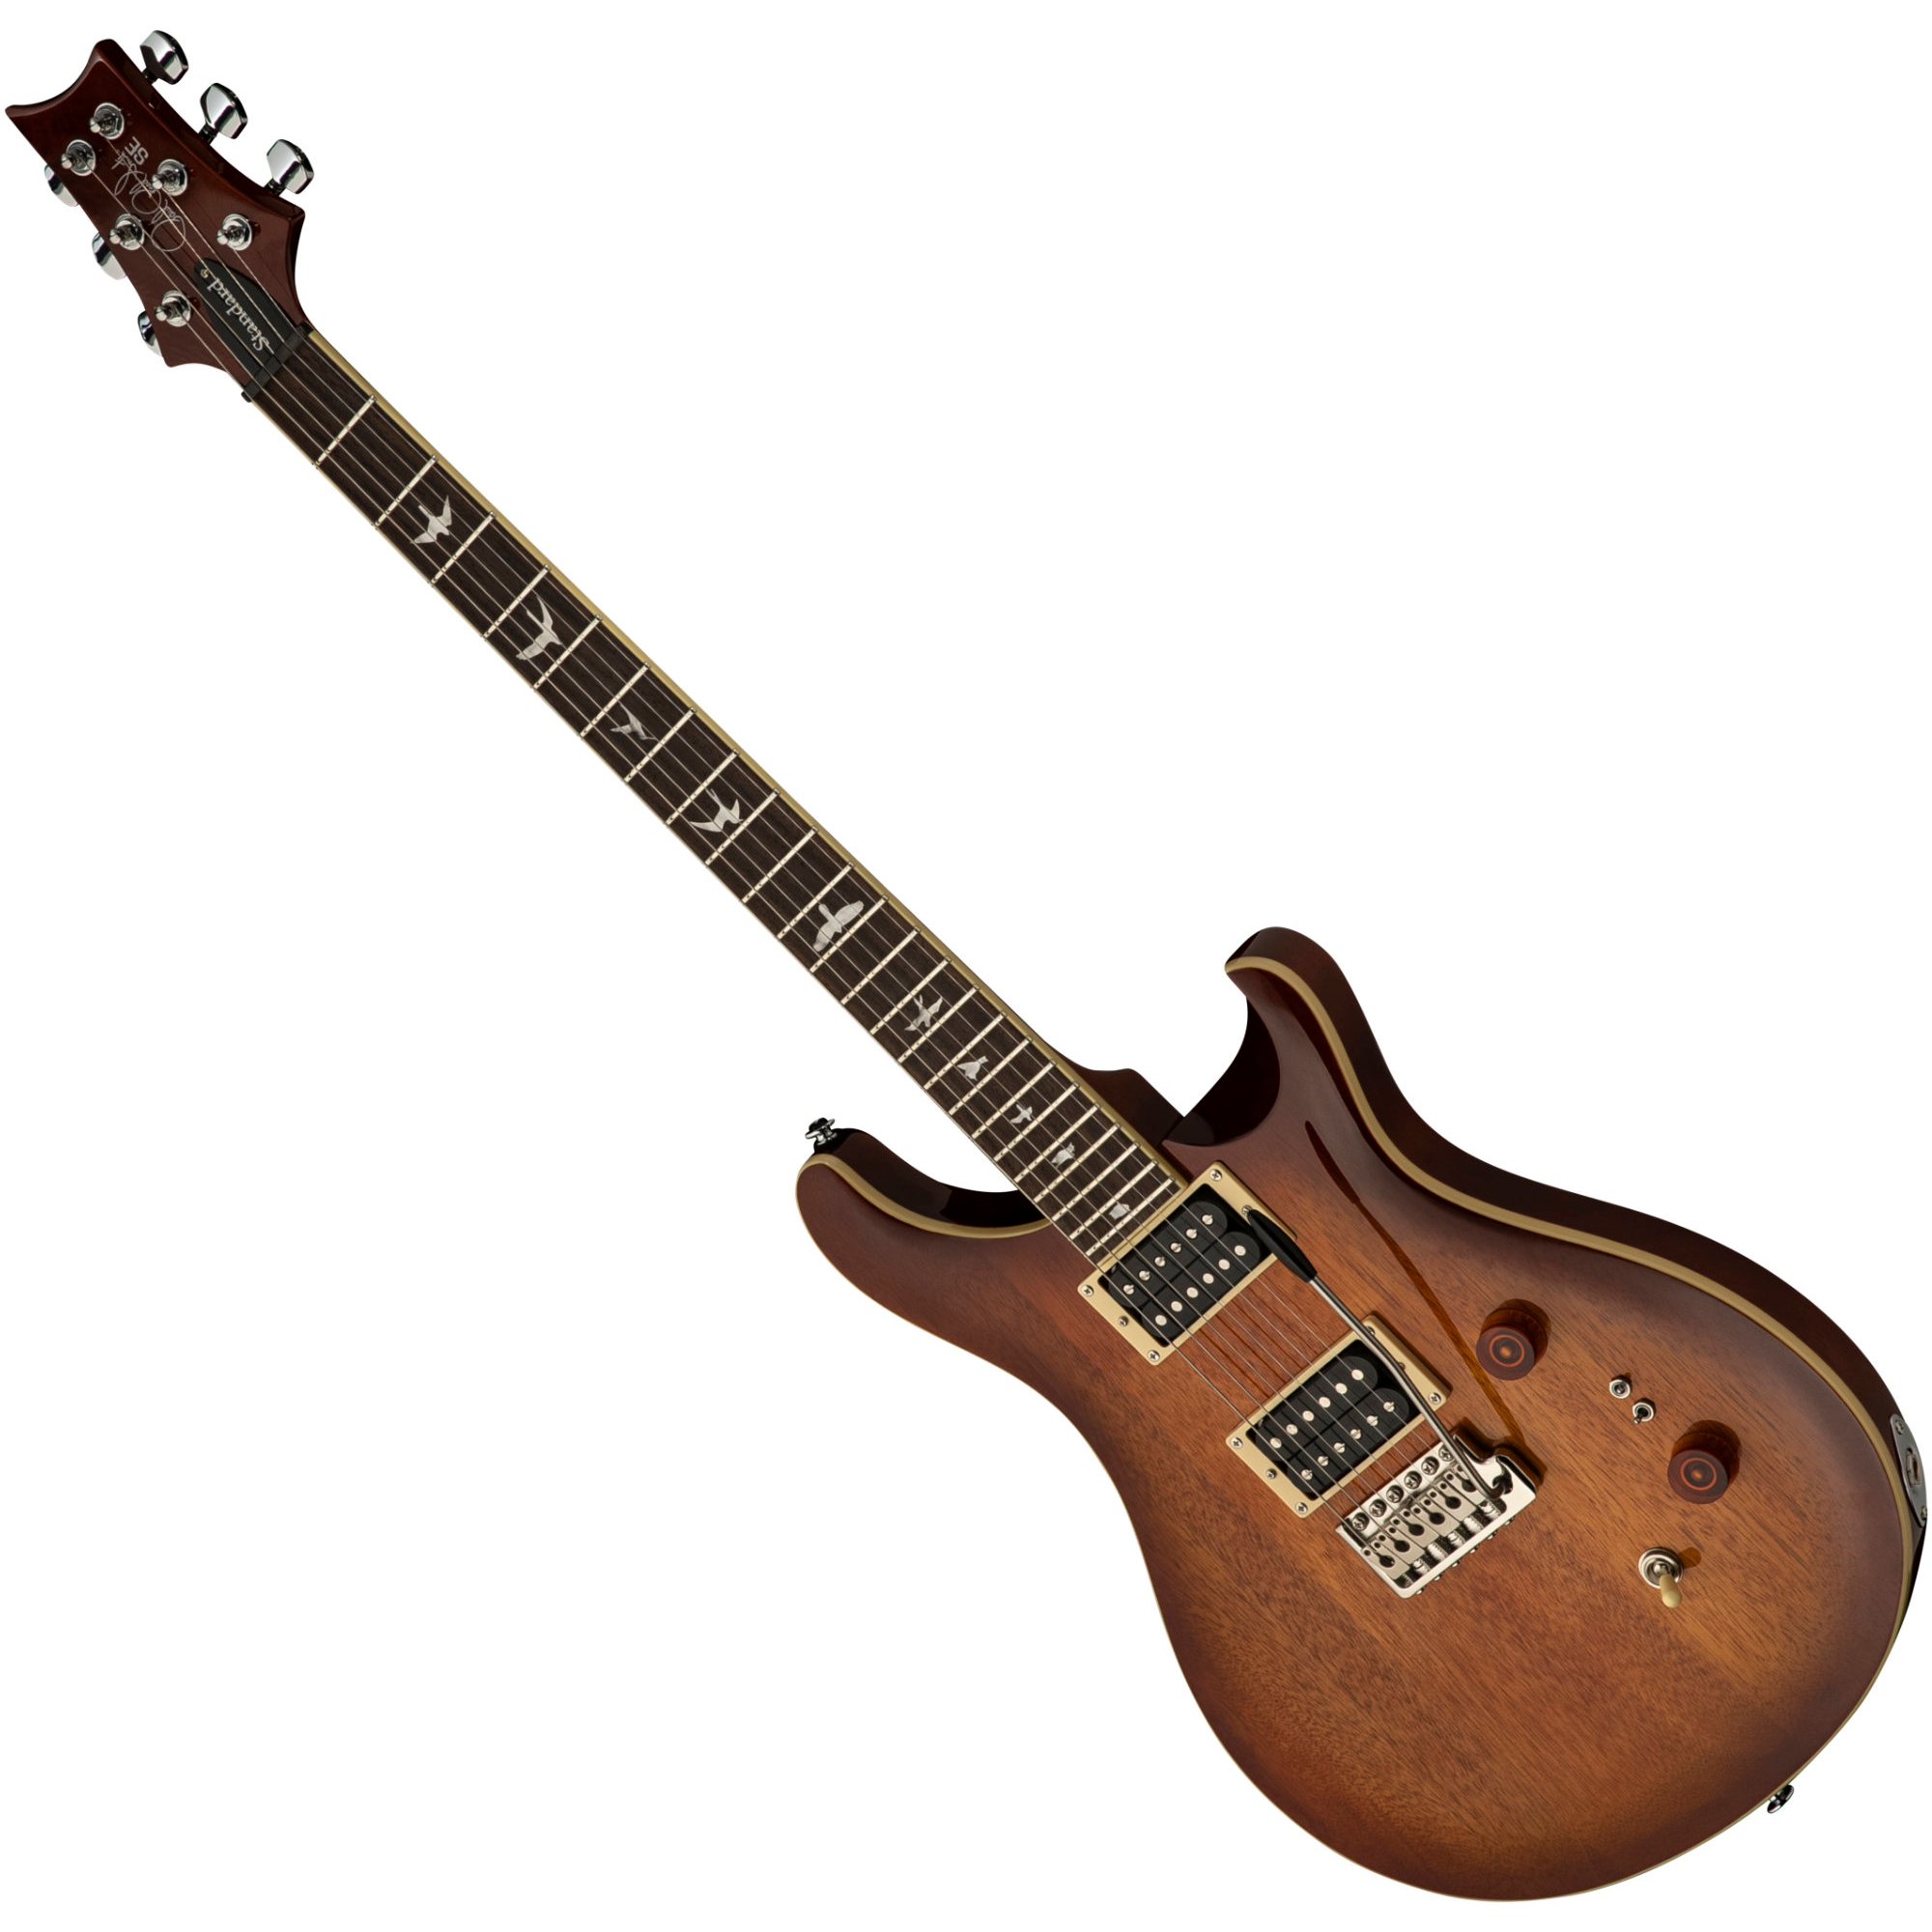 PRS SE Standard24-08 Lefty Translucent Blue エレキギター ポール 